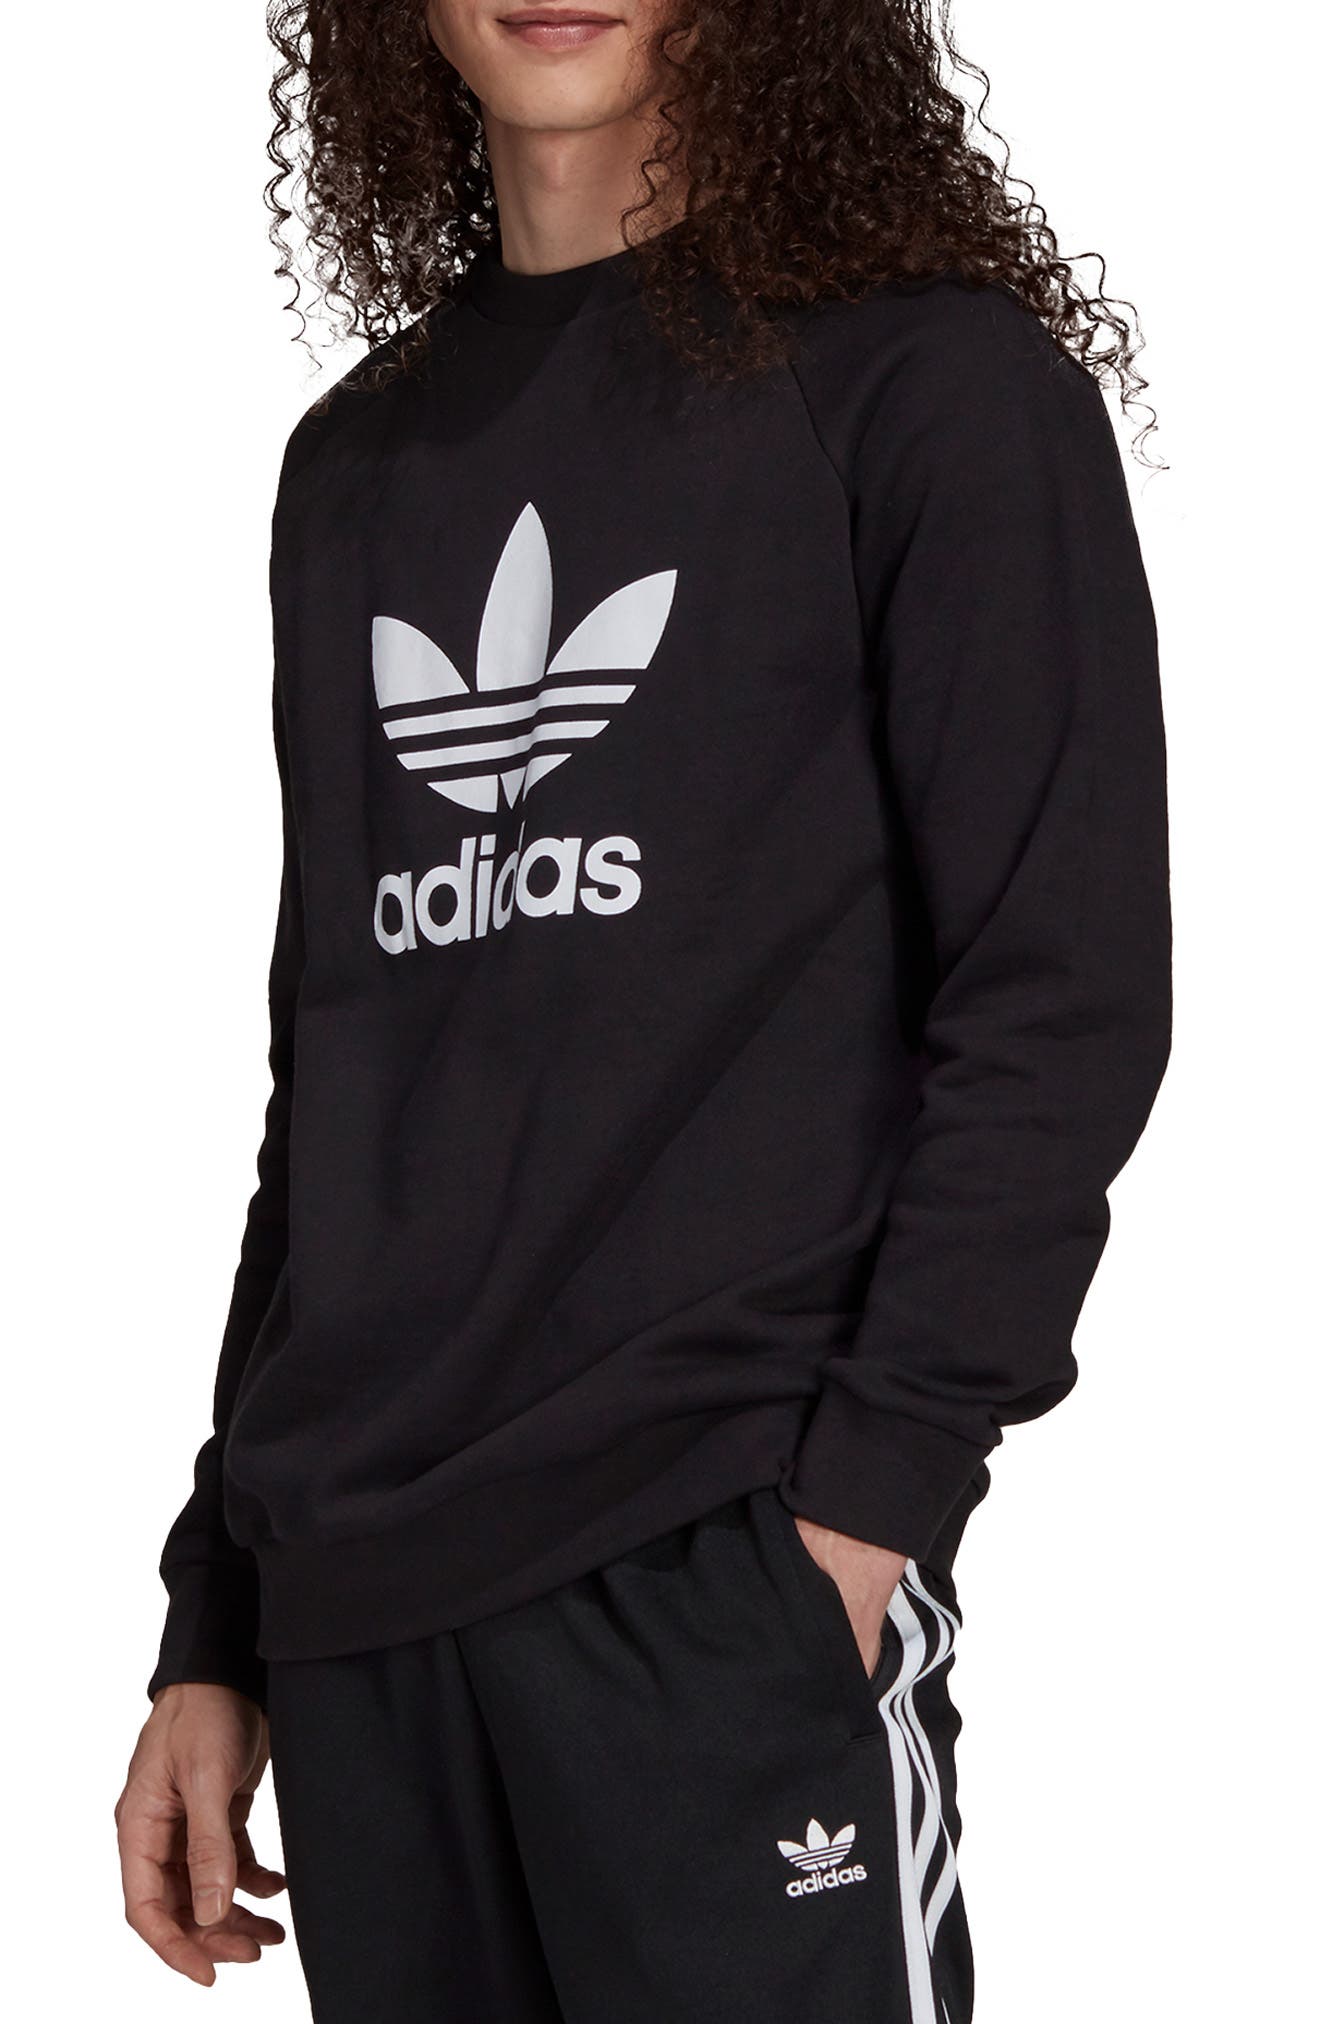 WOMEN FASHION Jumpers & Sweatshirts Hoodless Black XS discount 64% Adidas sweatshirt 